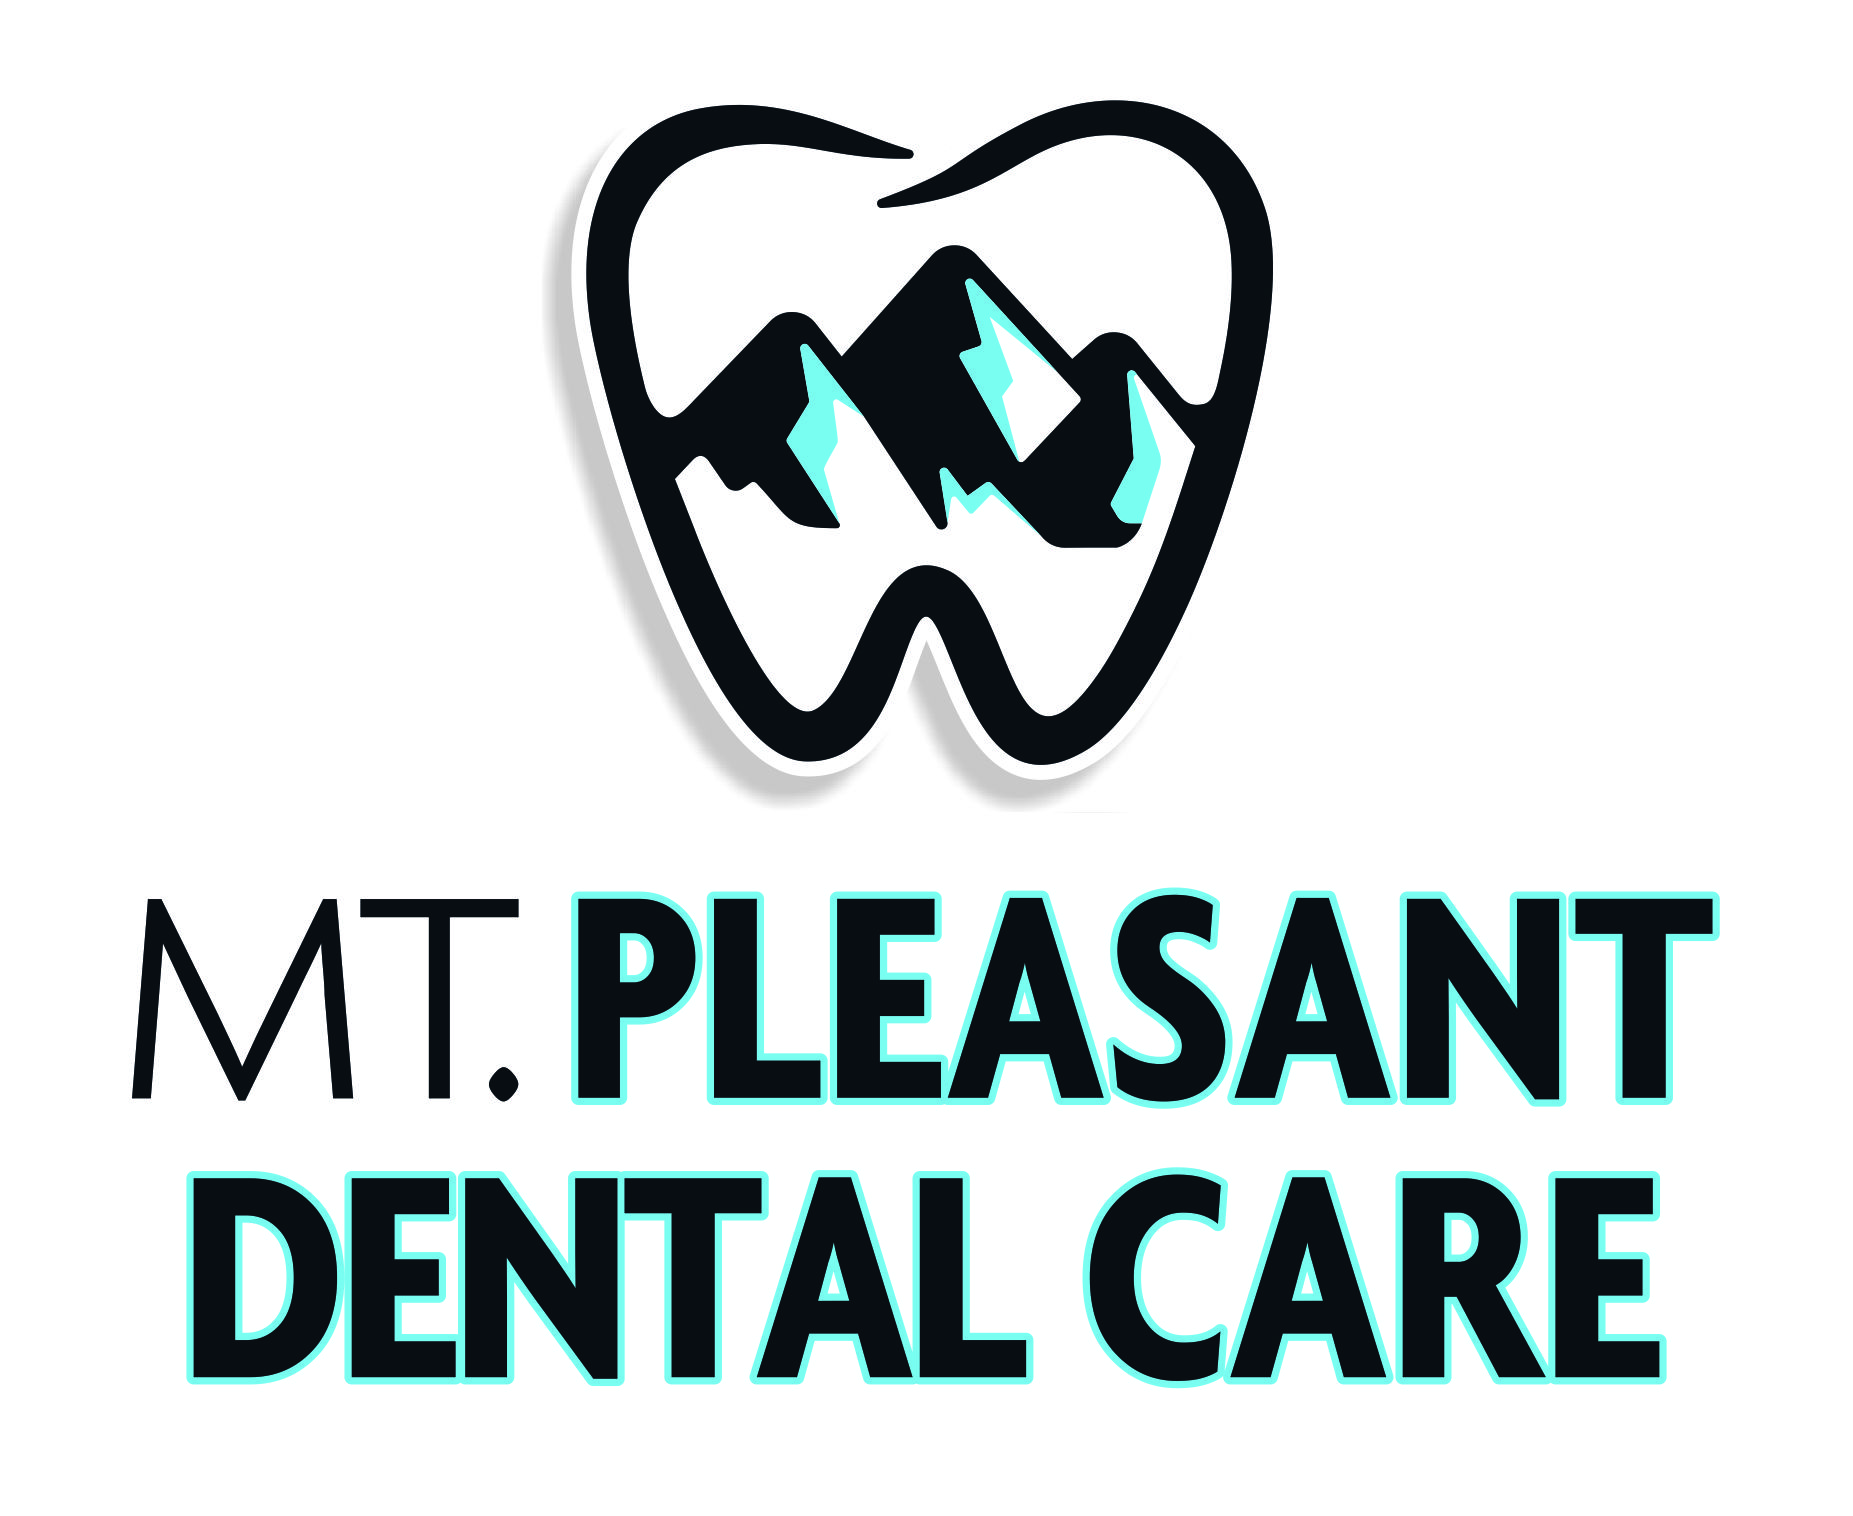 Mount Pleasant Dental Care